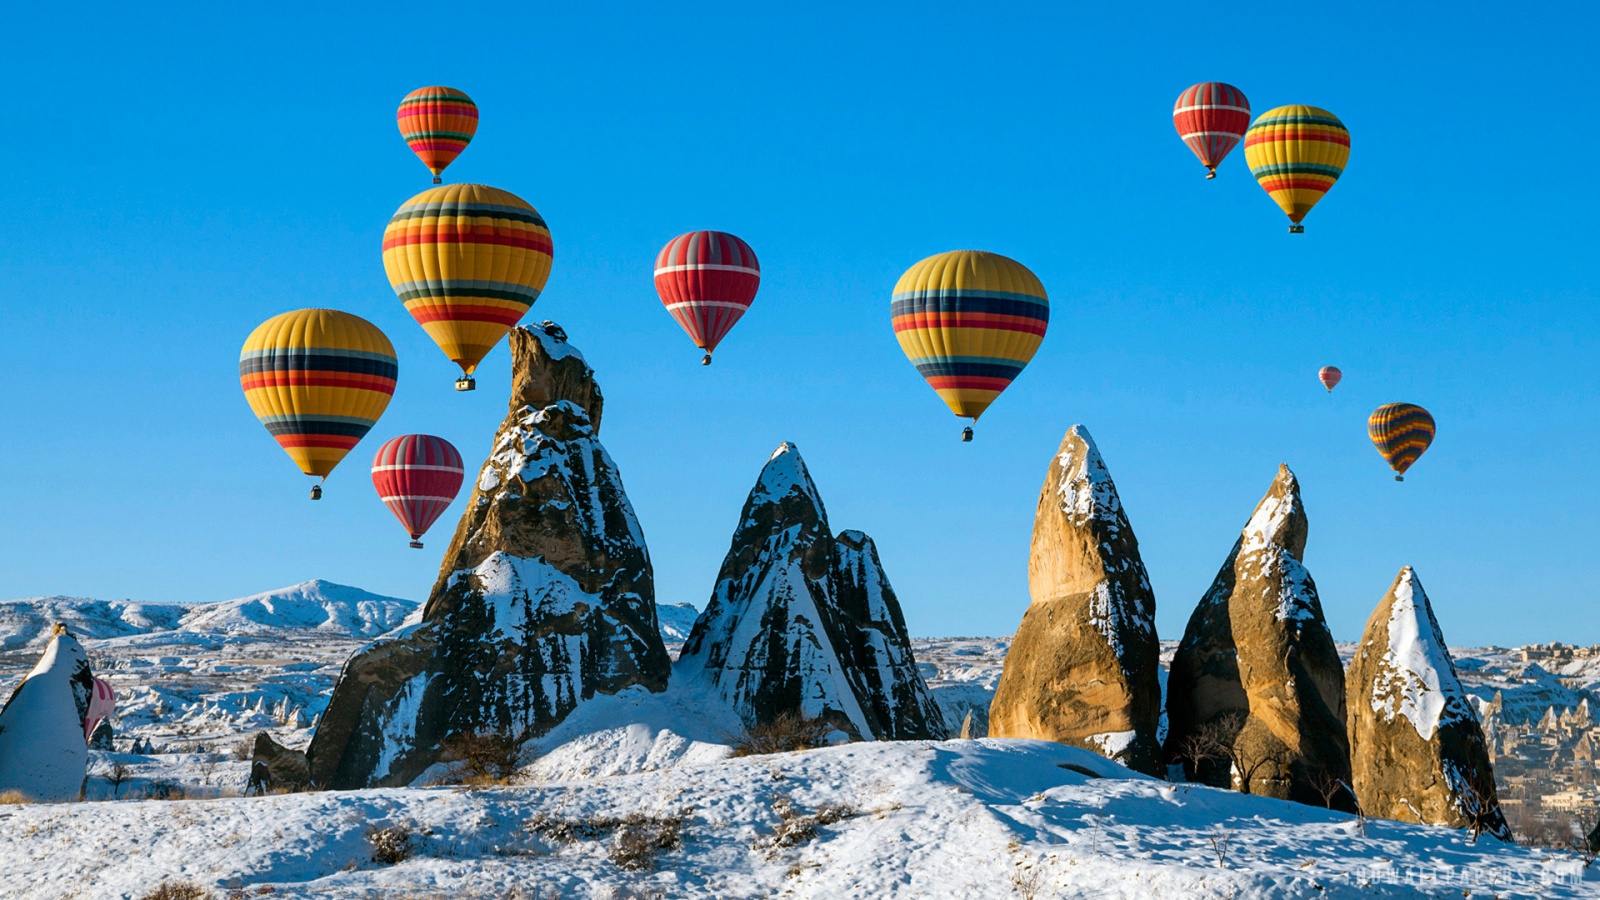 Balloons over Snowy Cappadocia Turkey HD Wallpaper   iHD Wallpapers